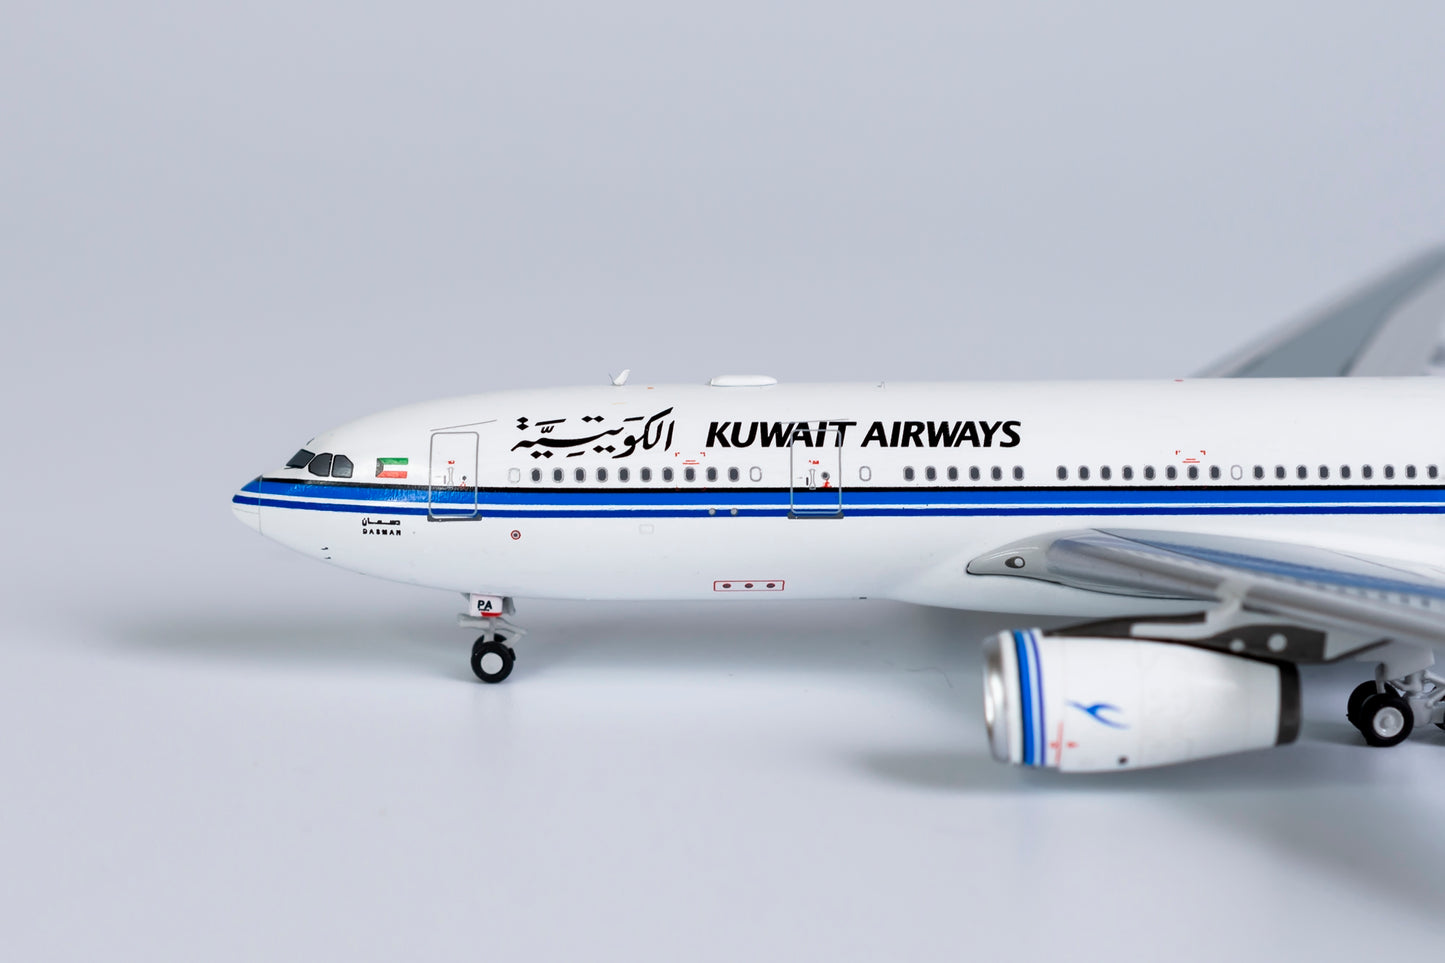 1:400 NG Models Kuwait Airways Airbus A330-200 9K-APA 61039